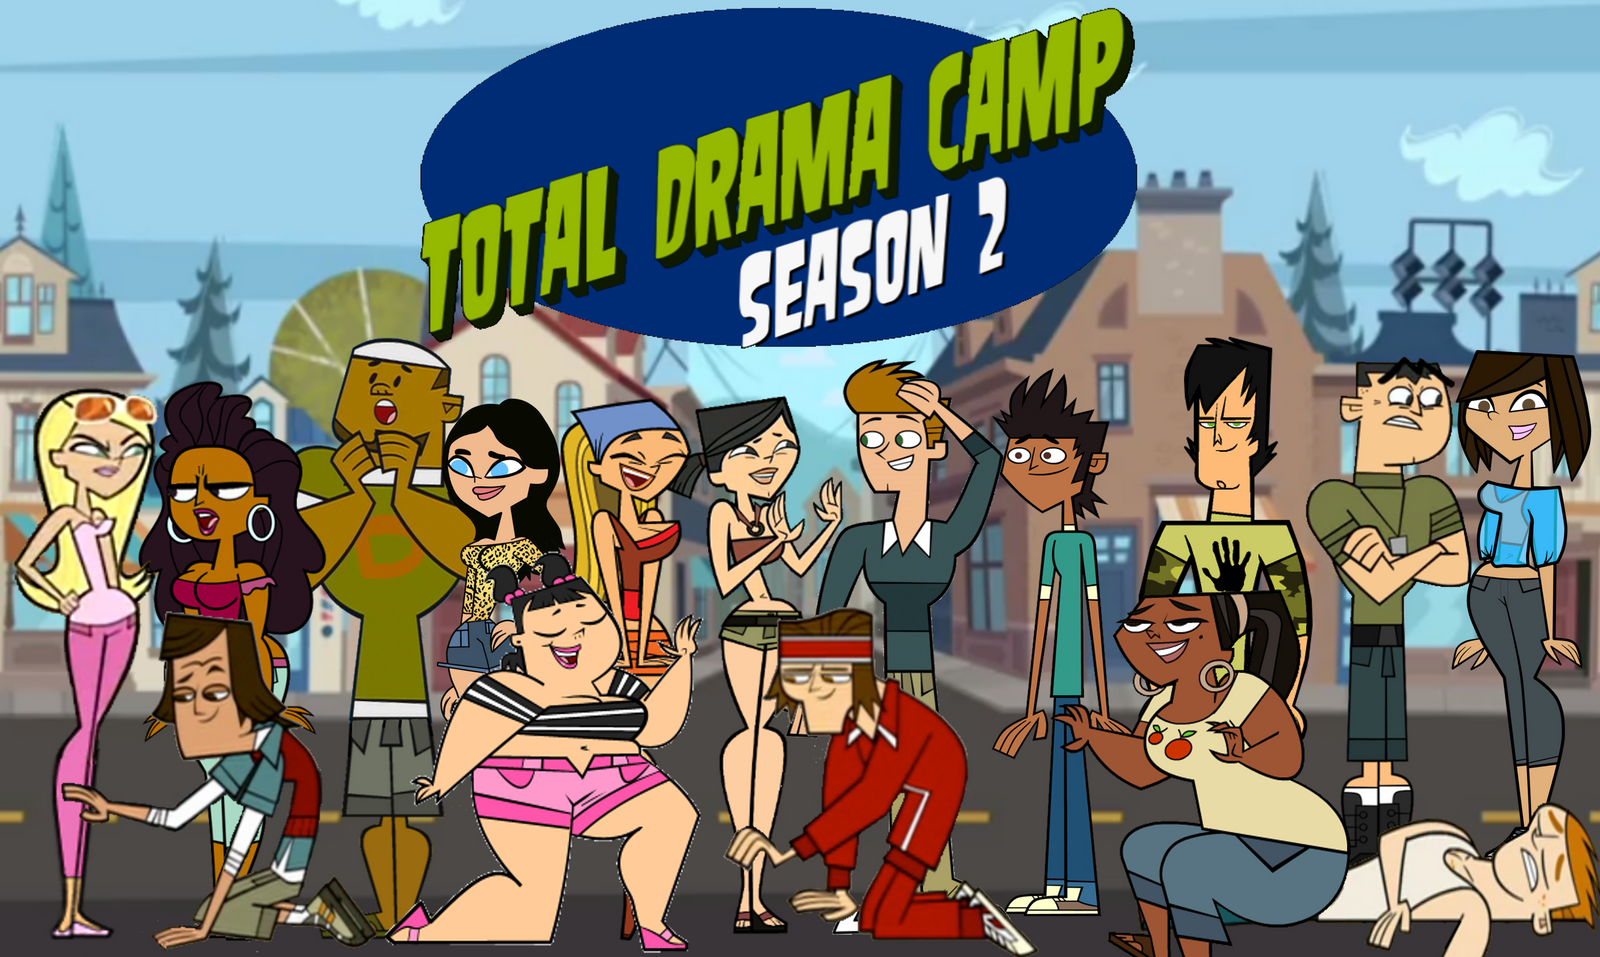 Total Drama Camp Season 2 Poster by DawnFan3 on DeviantArt